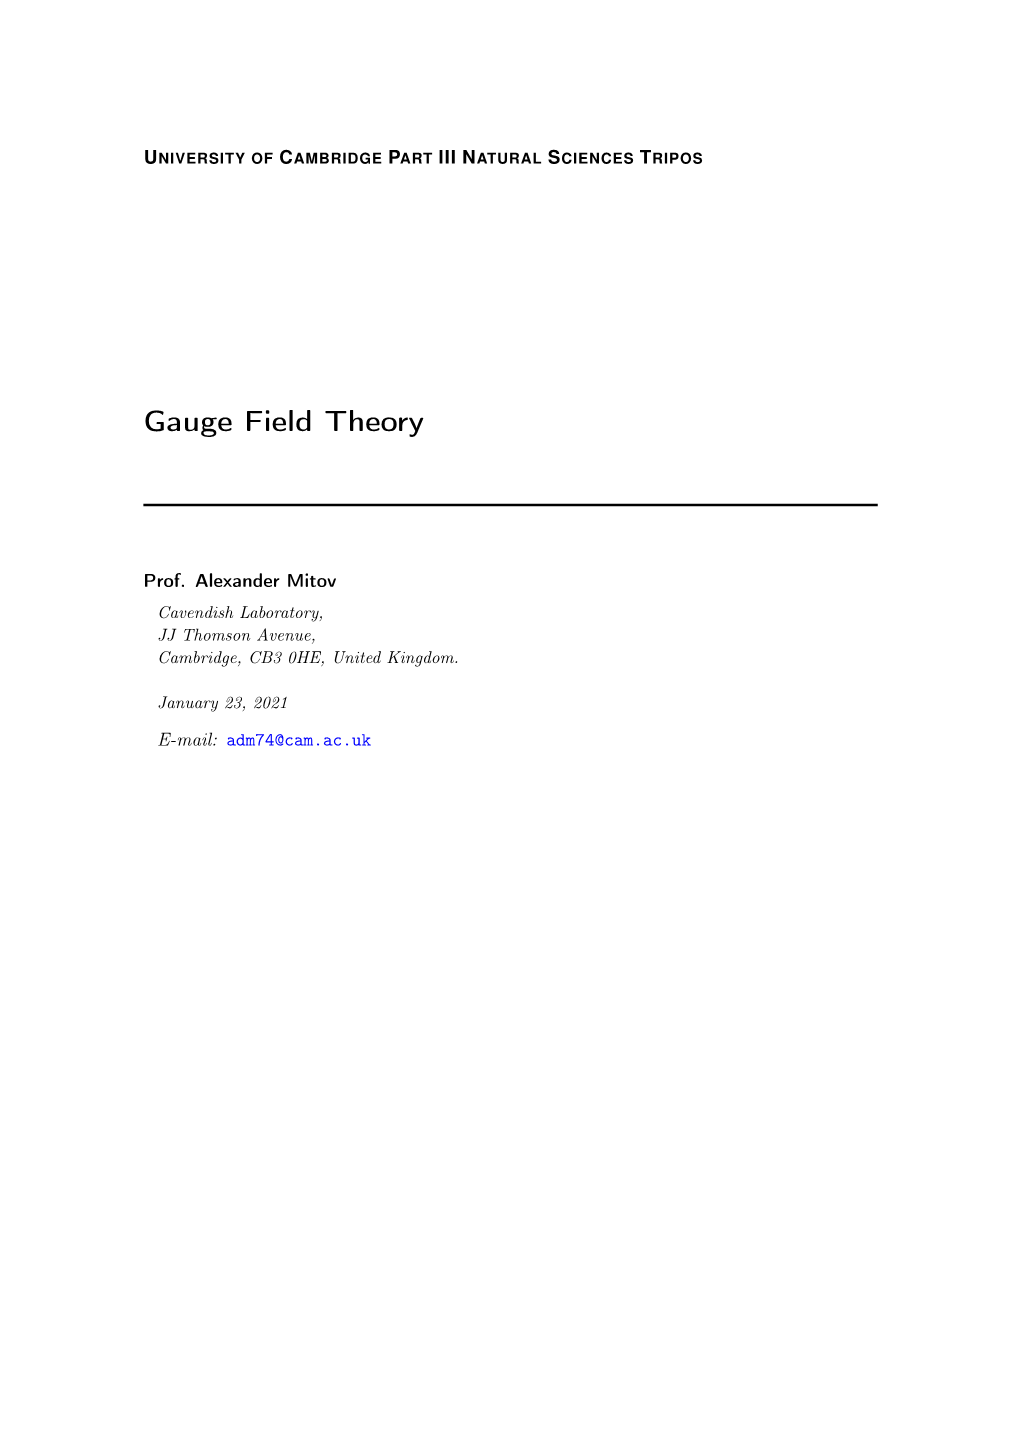 Gauge Field Theory